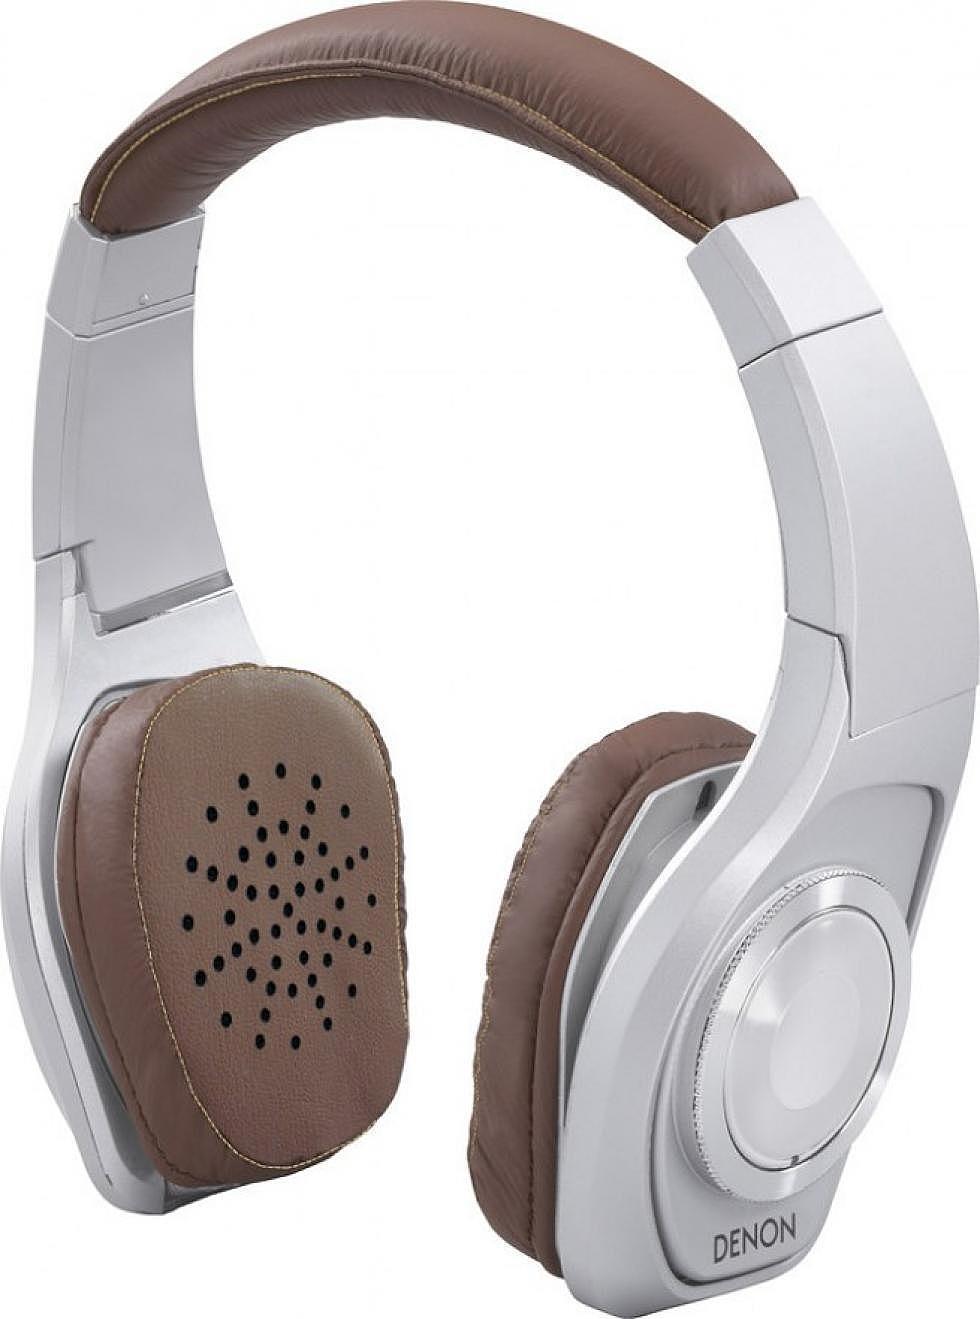 Noise-Canceling Denon Globe Cruiser Bluetooth Headphones